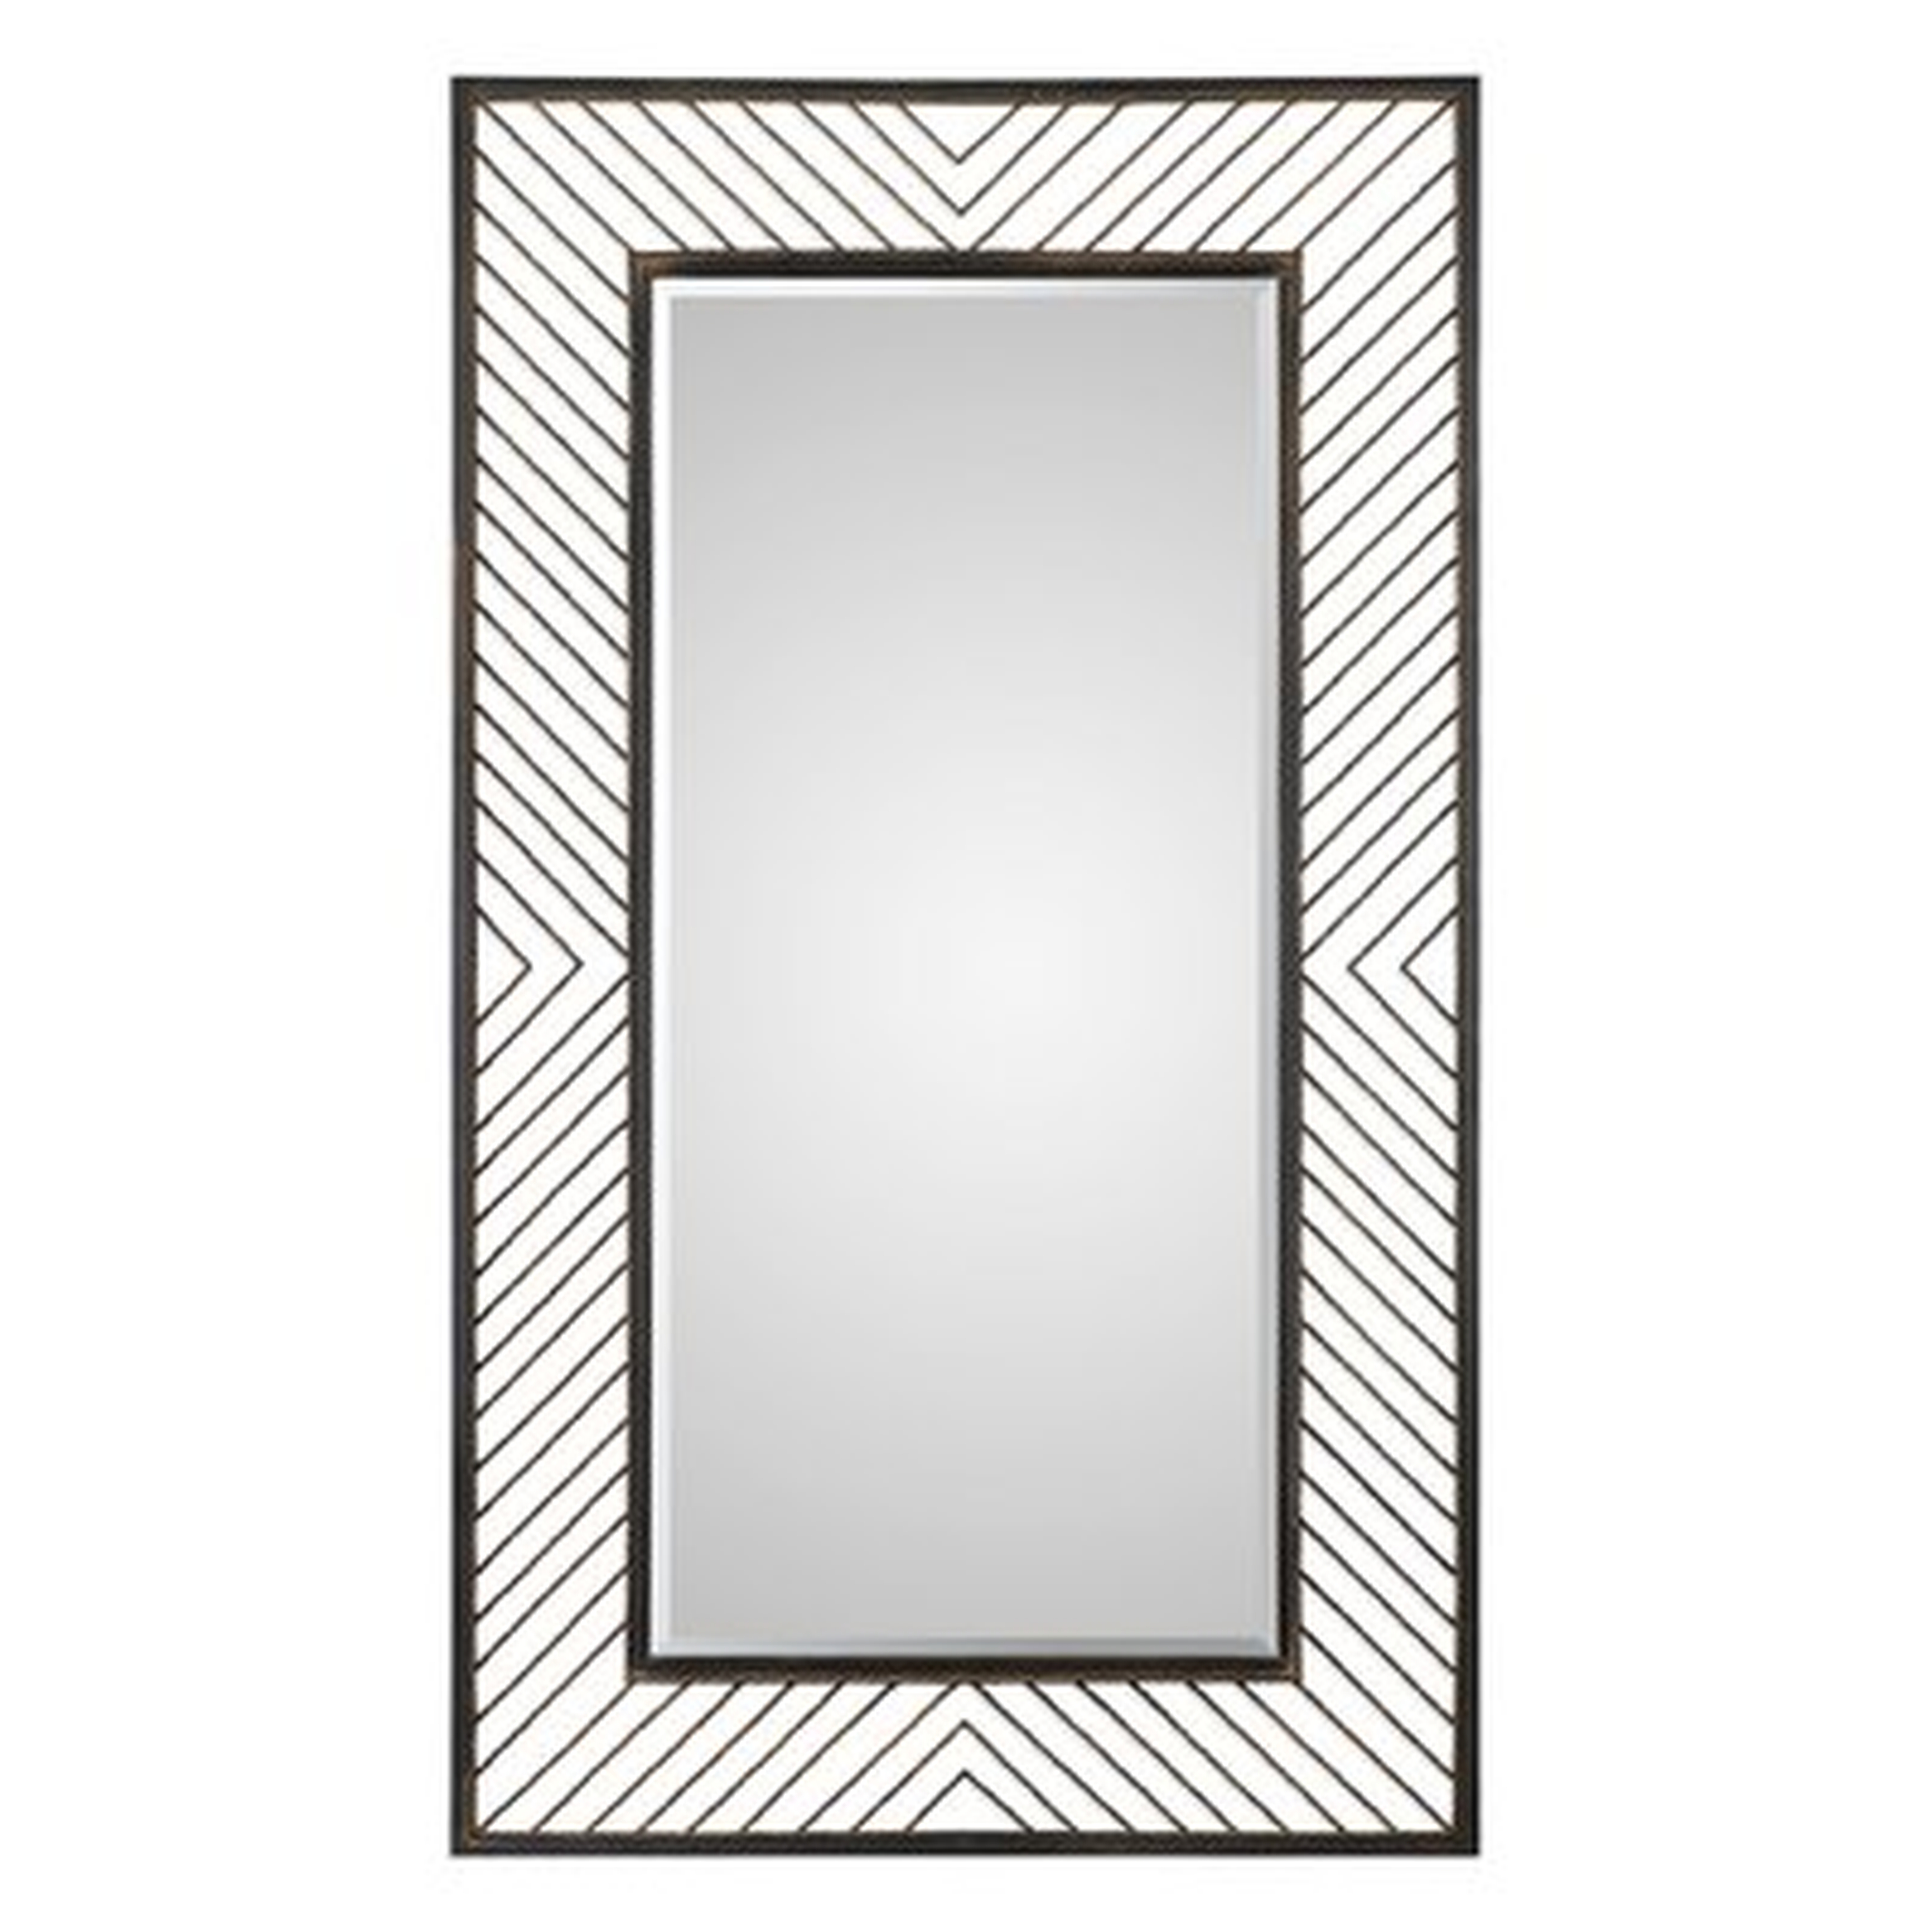 Chevron Framed Accent Mirror - Wayfair